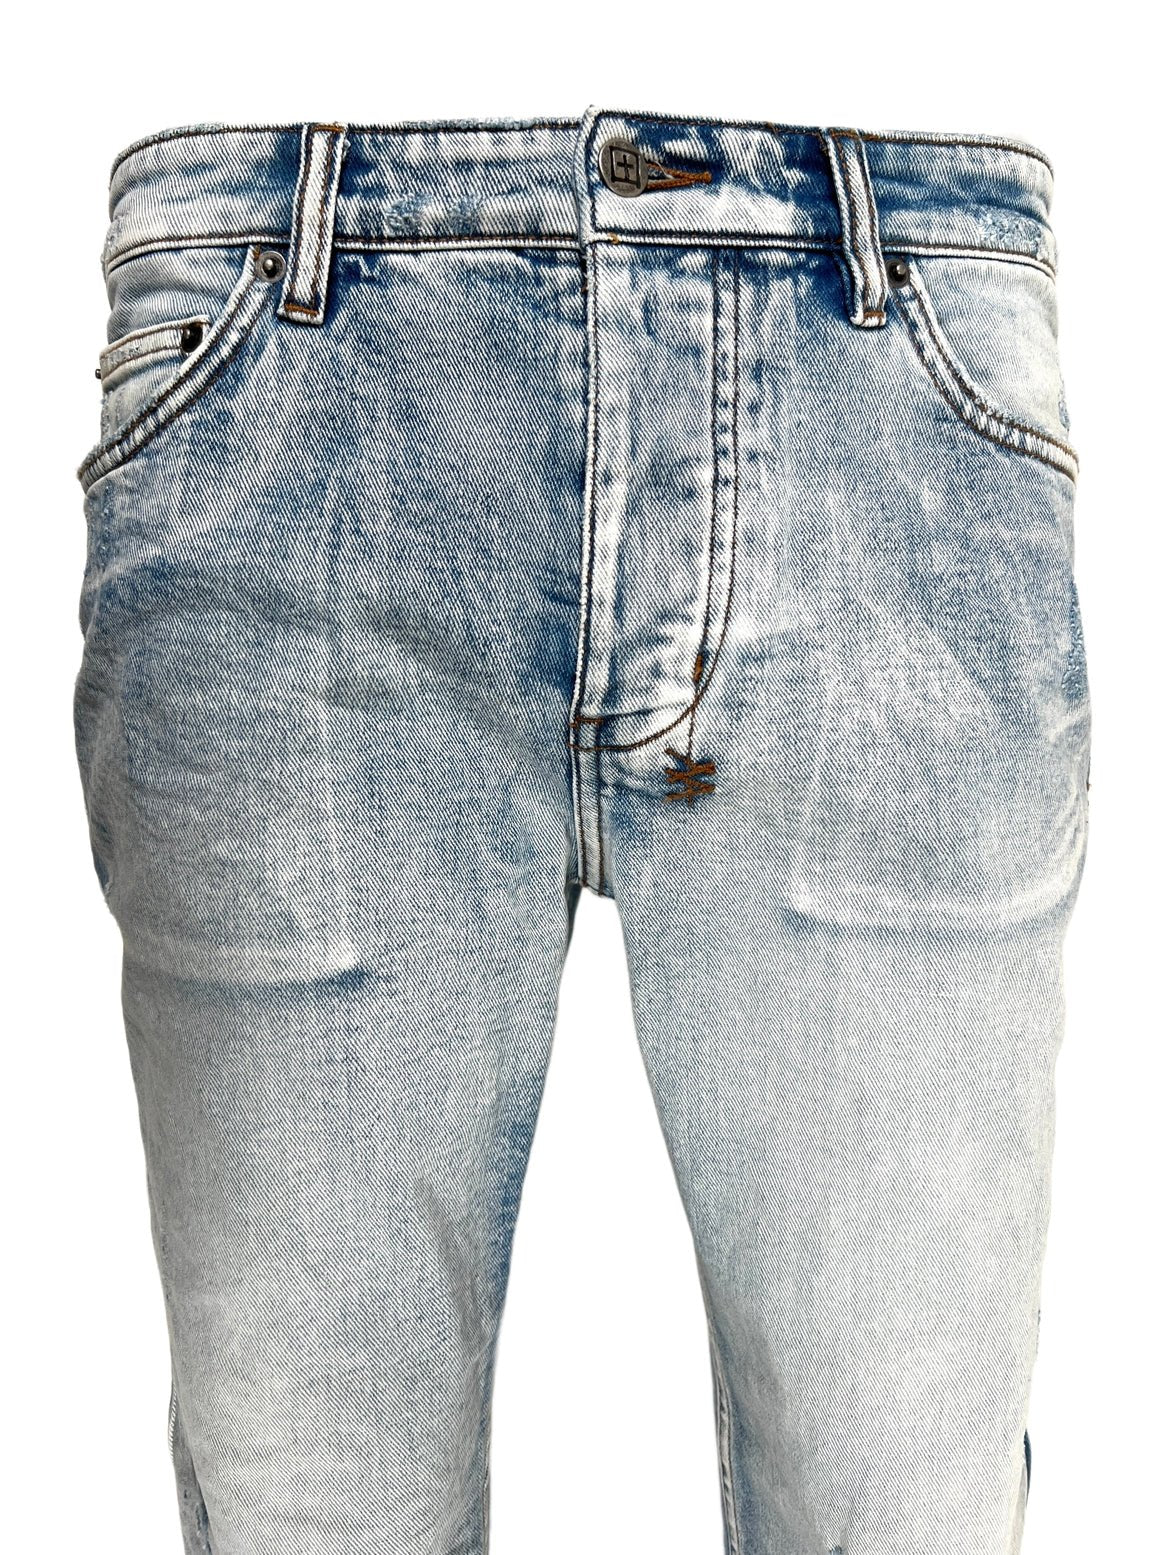 A pair of men's KSUBI HAZLOW CITY HIGH TRASHED DENIM jeans from KSUBI.